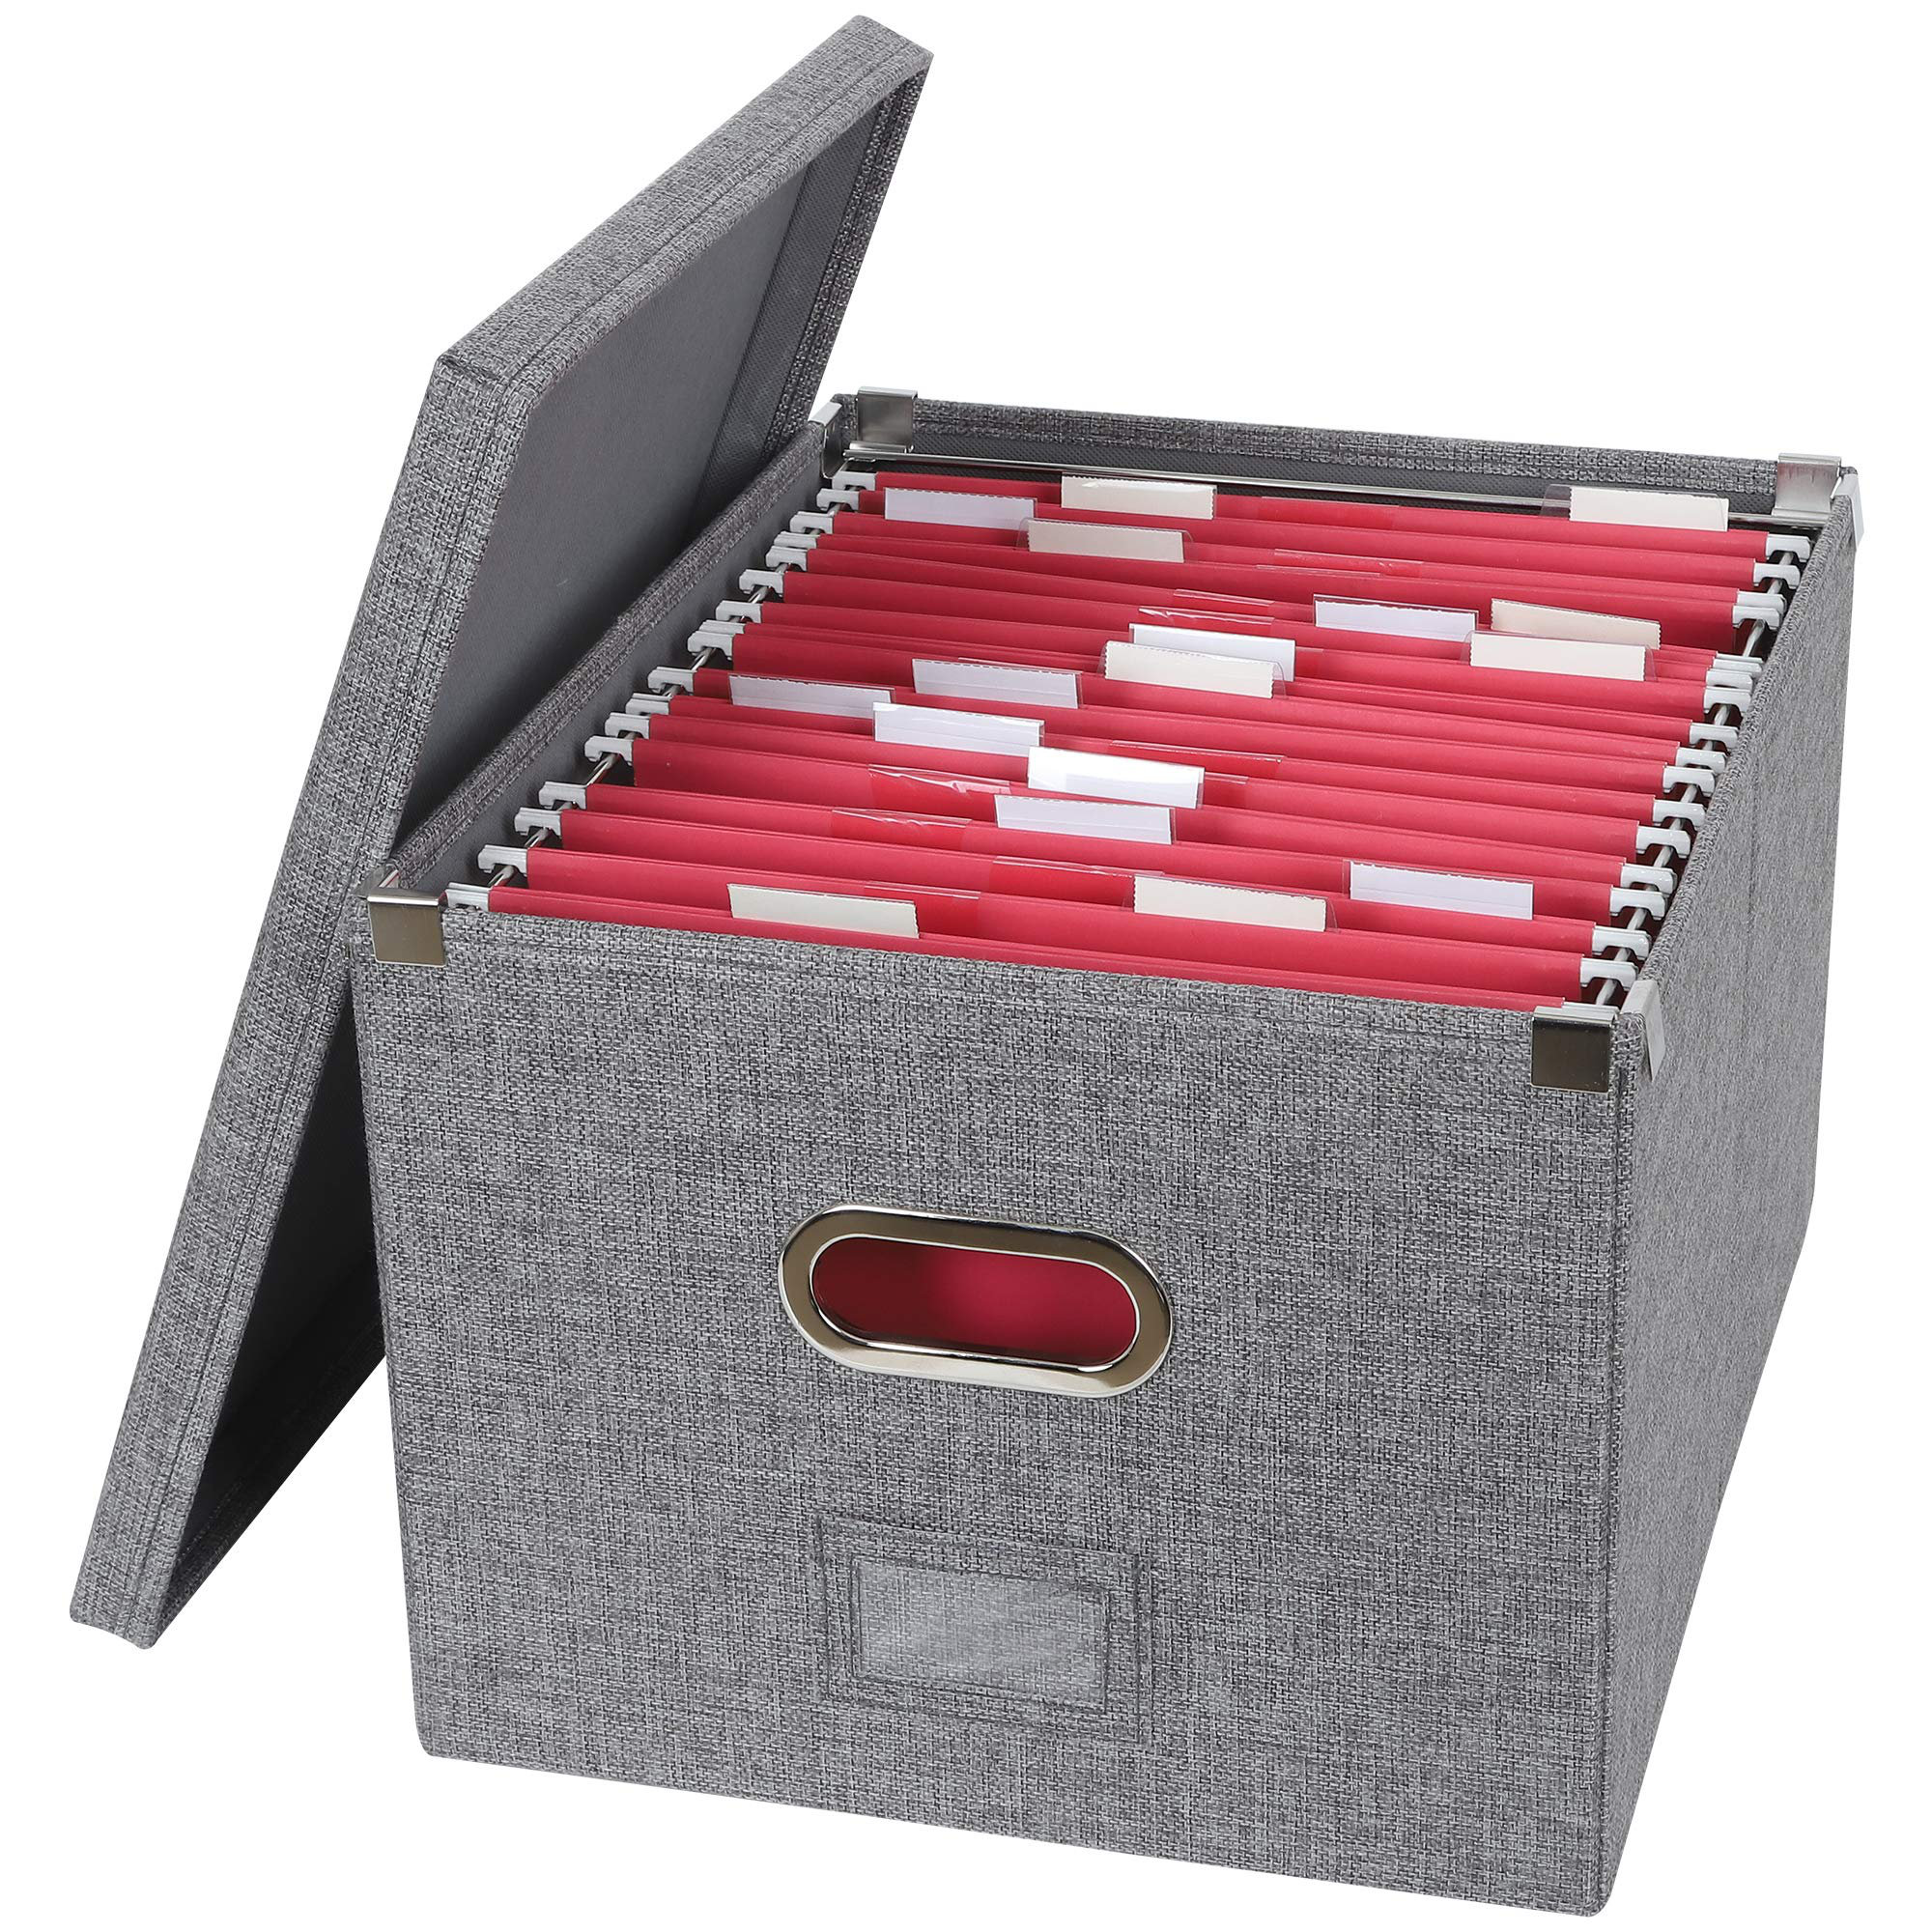 OfficeBox - Tidy Files Jumbo Document Storage Box With Lid